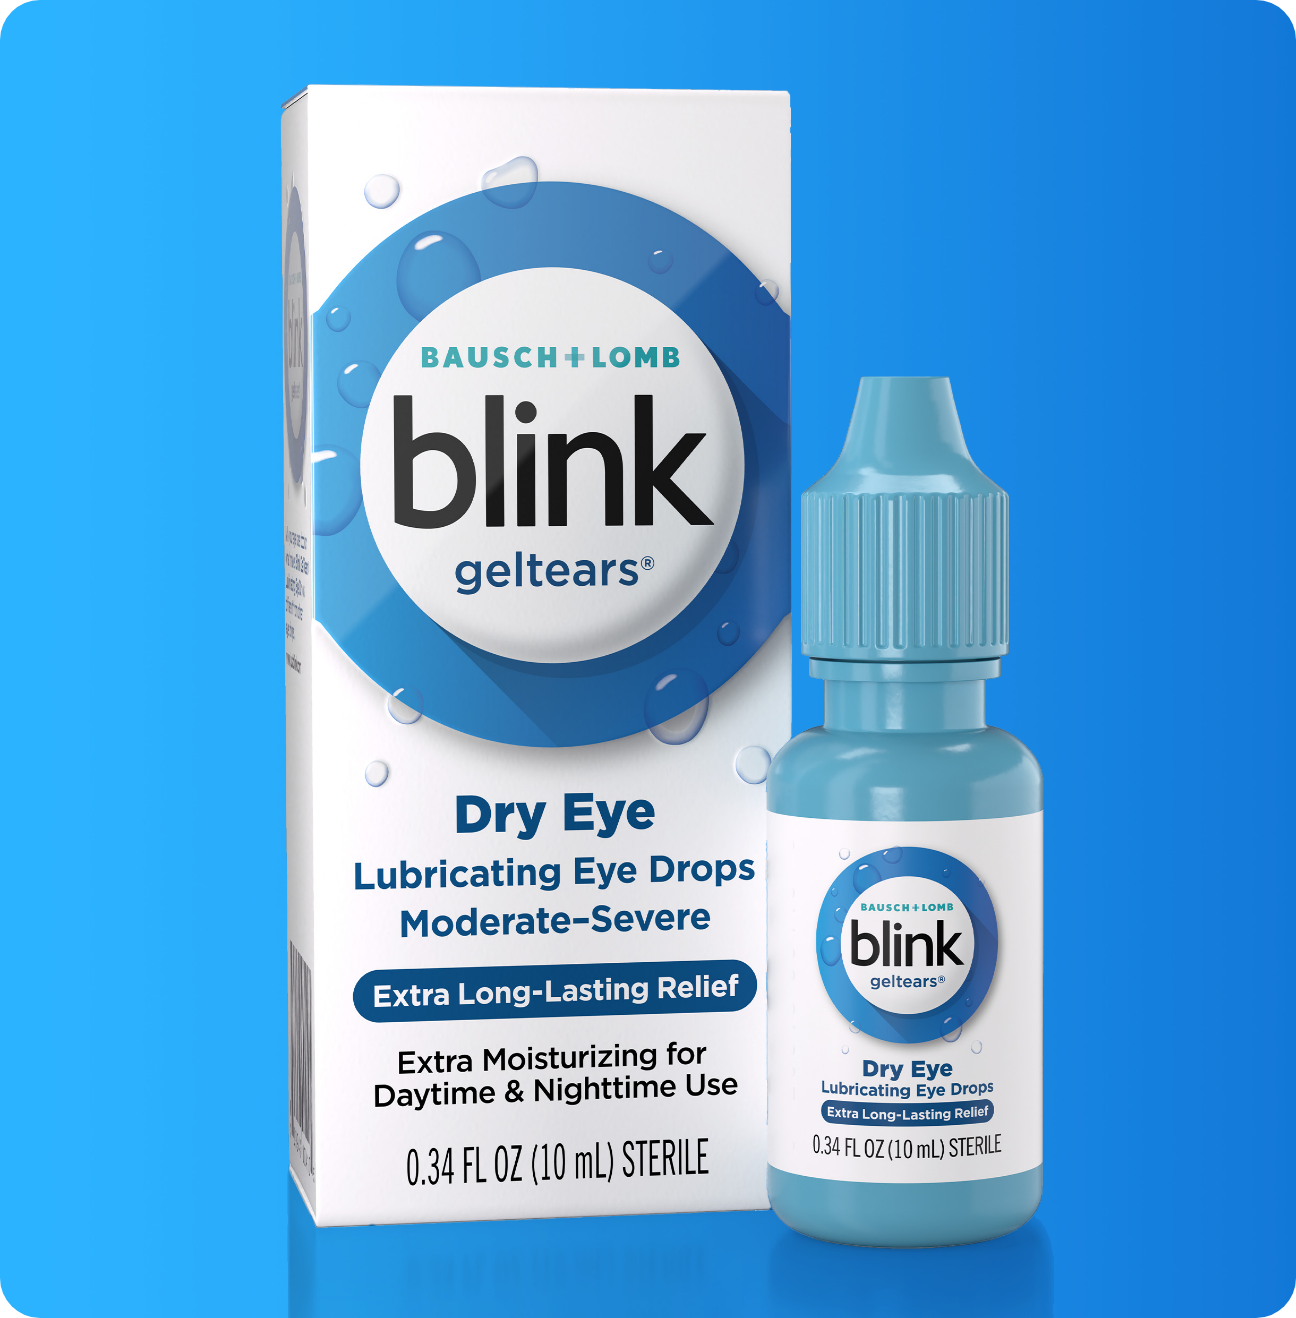 Blink GelTears Lubricating Eye Drops bottle and carton